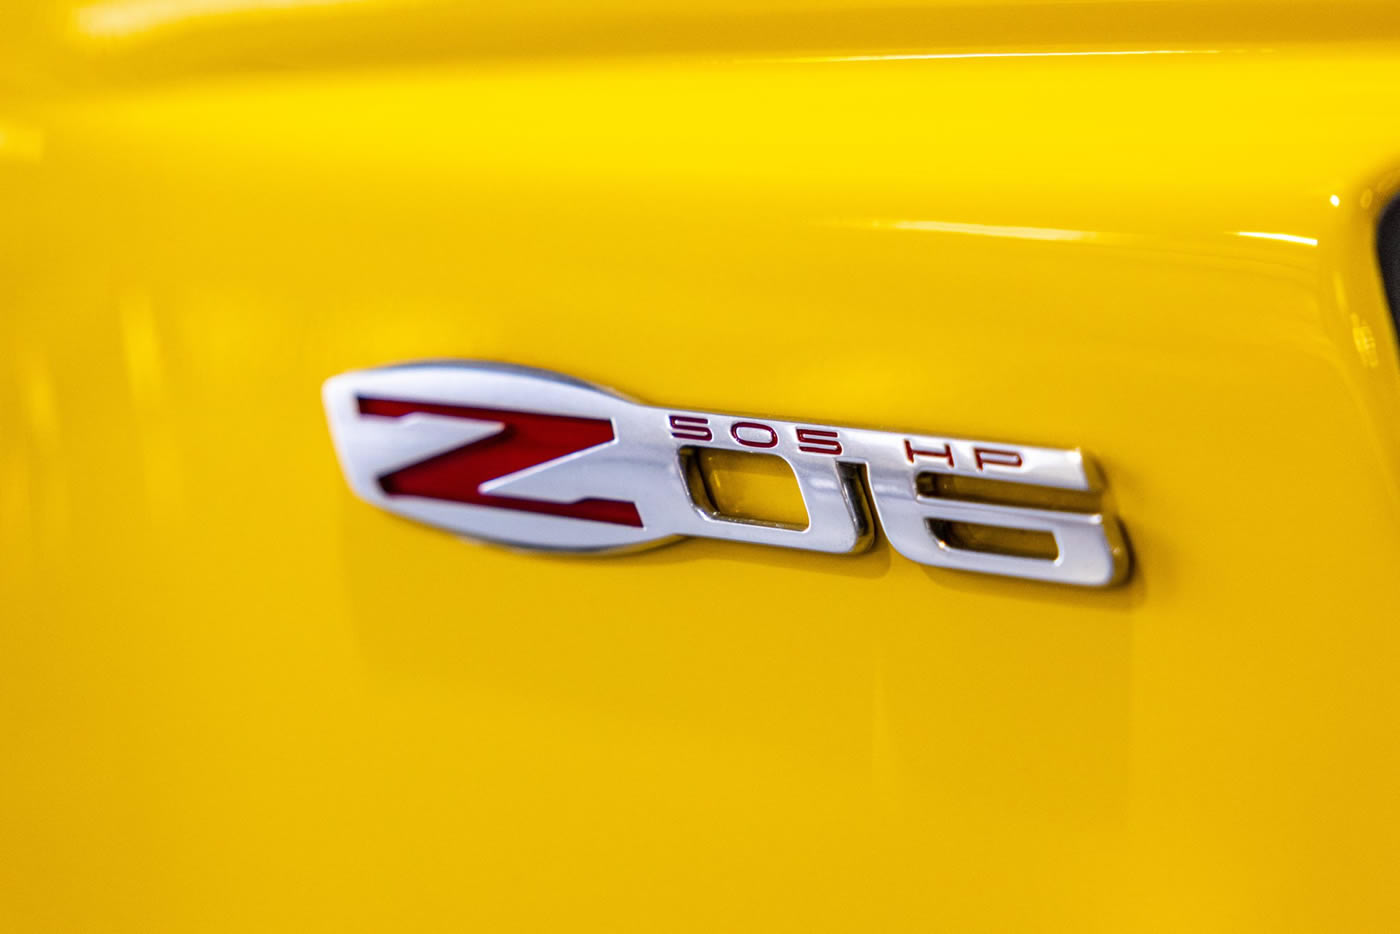 2008 Corvette Z06 in Velocity Yellow